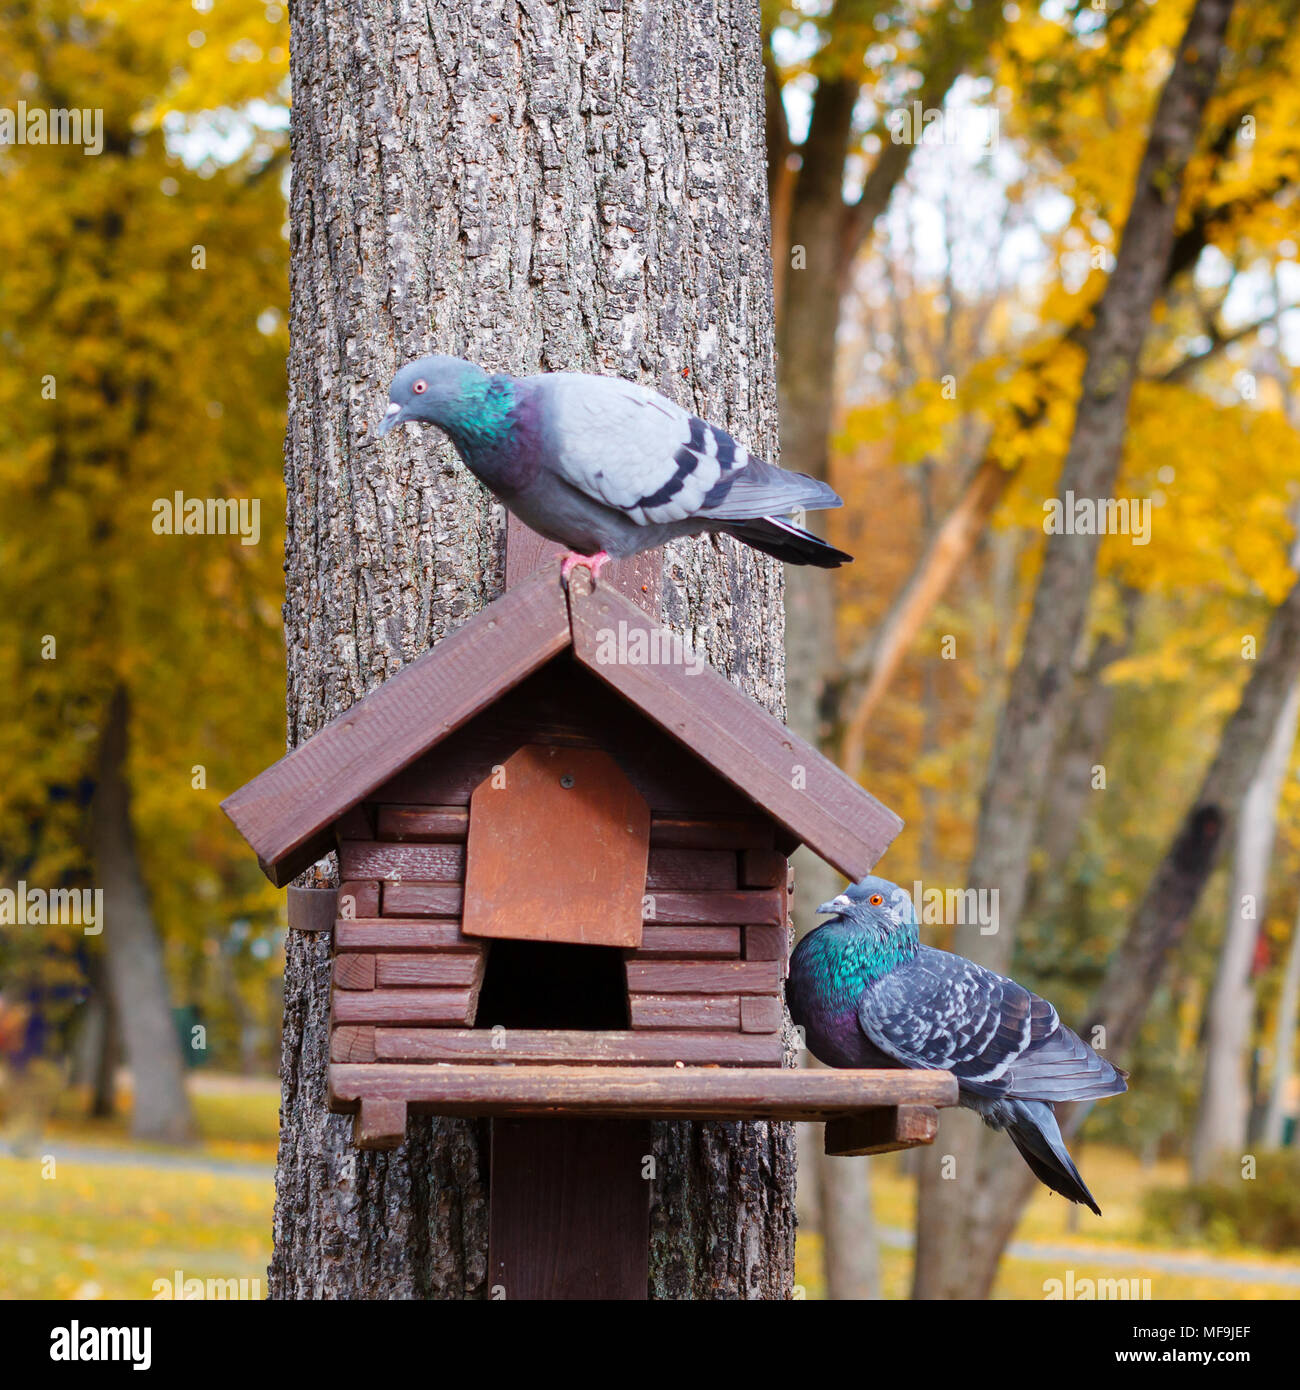 Casa para pájaros fotografías e imágenes de alta resolución - Alamy